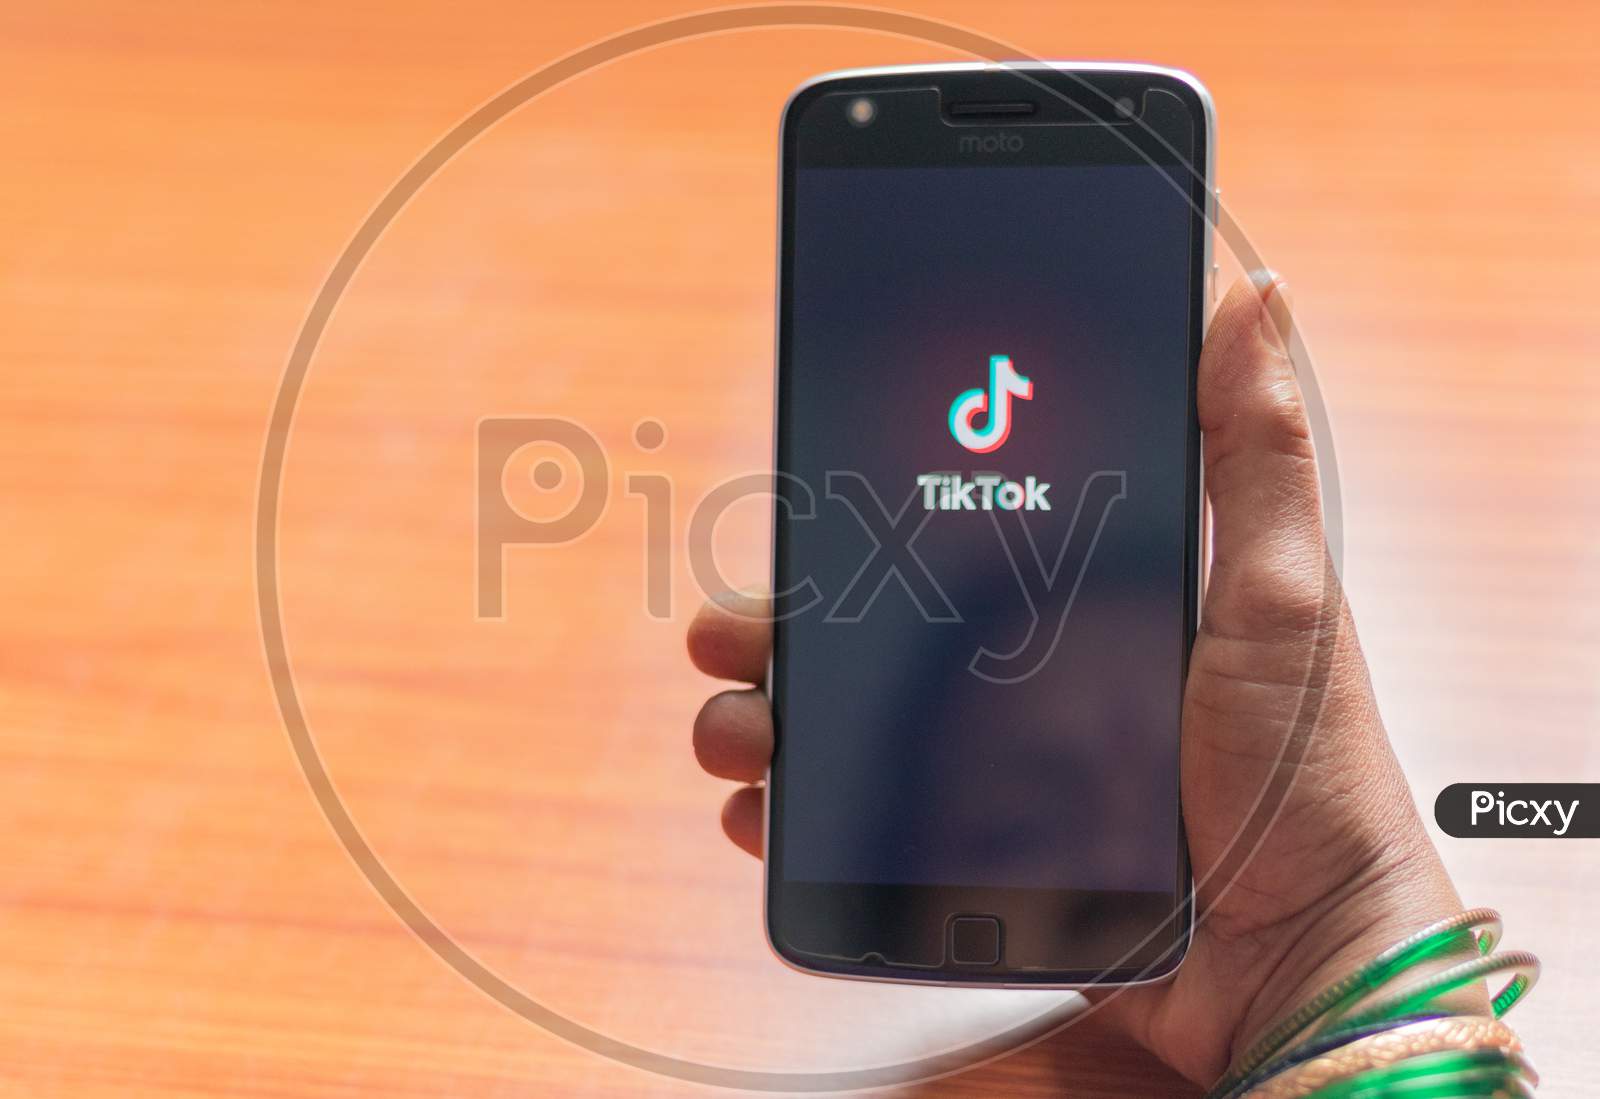 Tiktok Application On A Mobile Phone